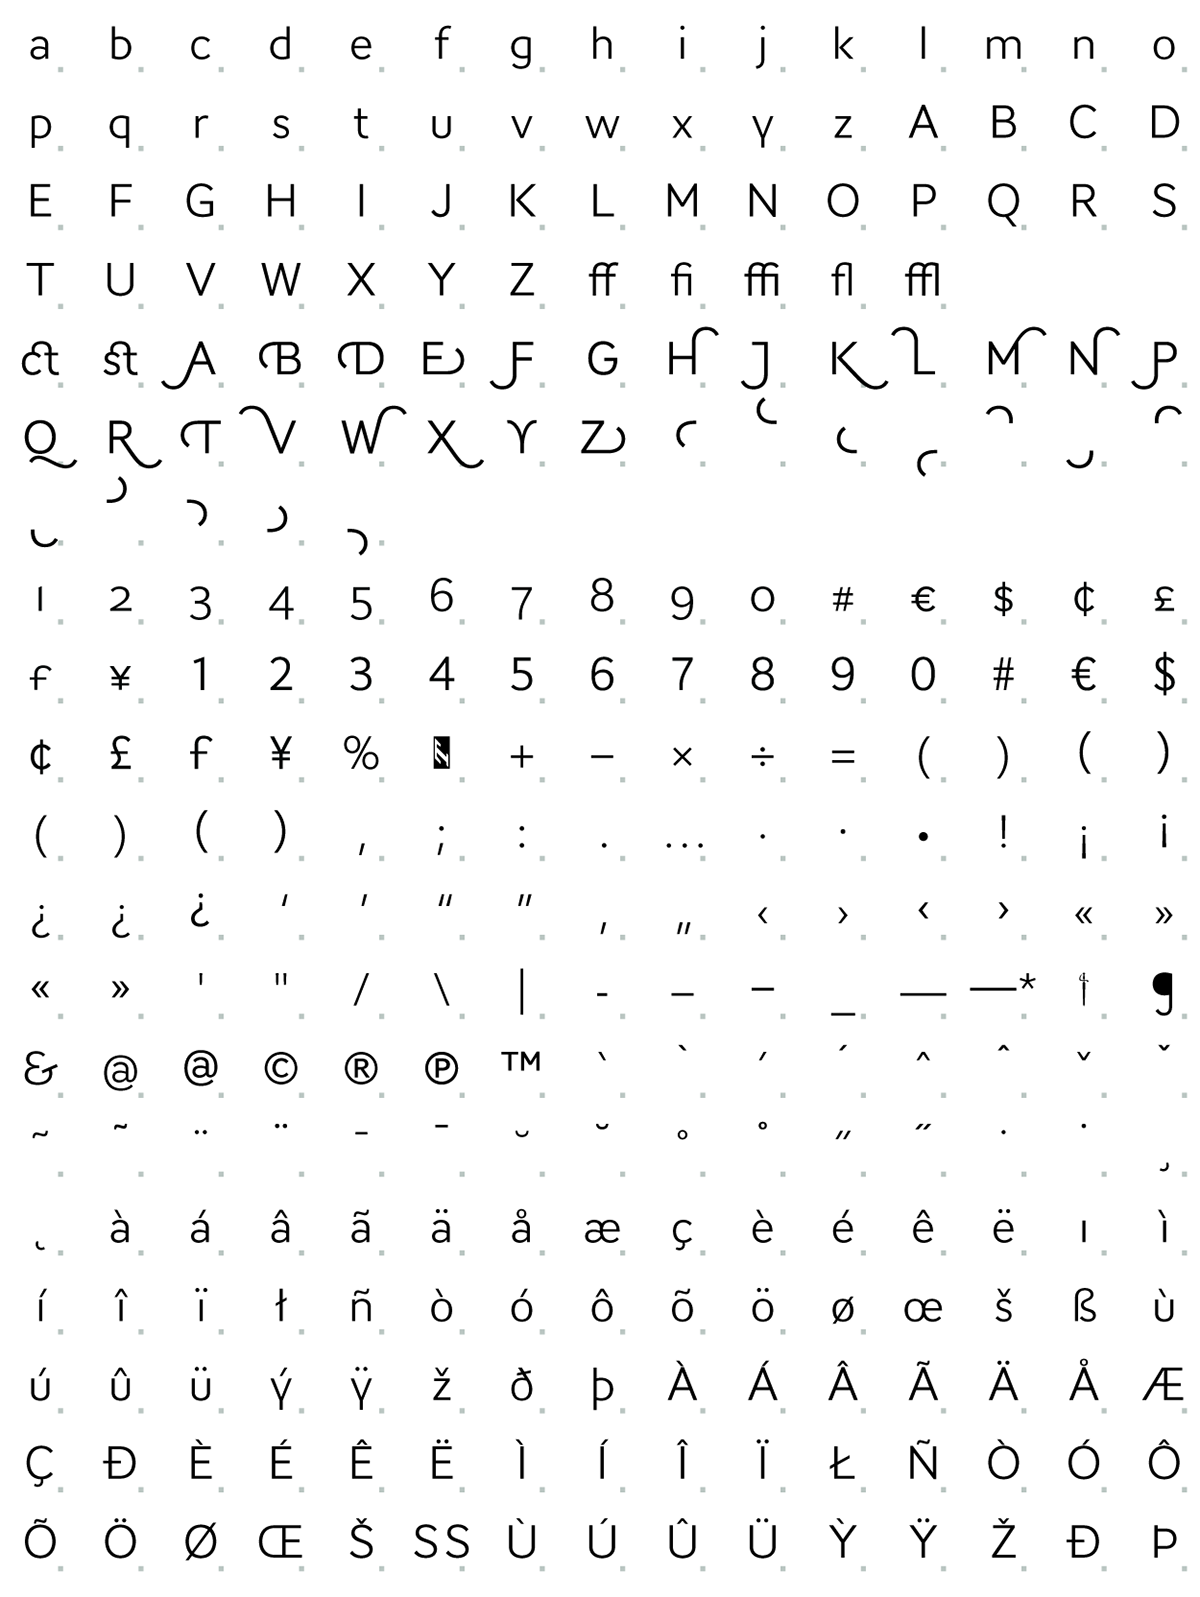 Typofonderie Jean Francois Porchez AW Conqueror free FreeFonts font Opentype Anisette geometric Didot serif sans inline